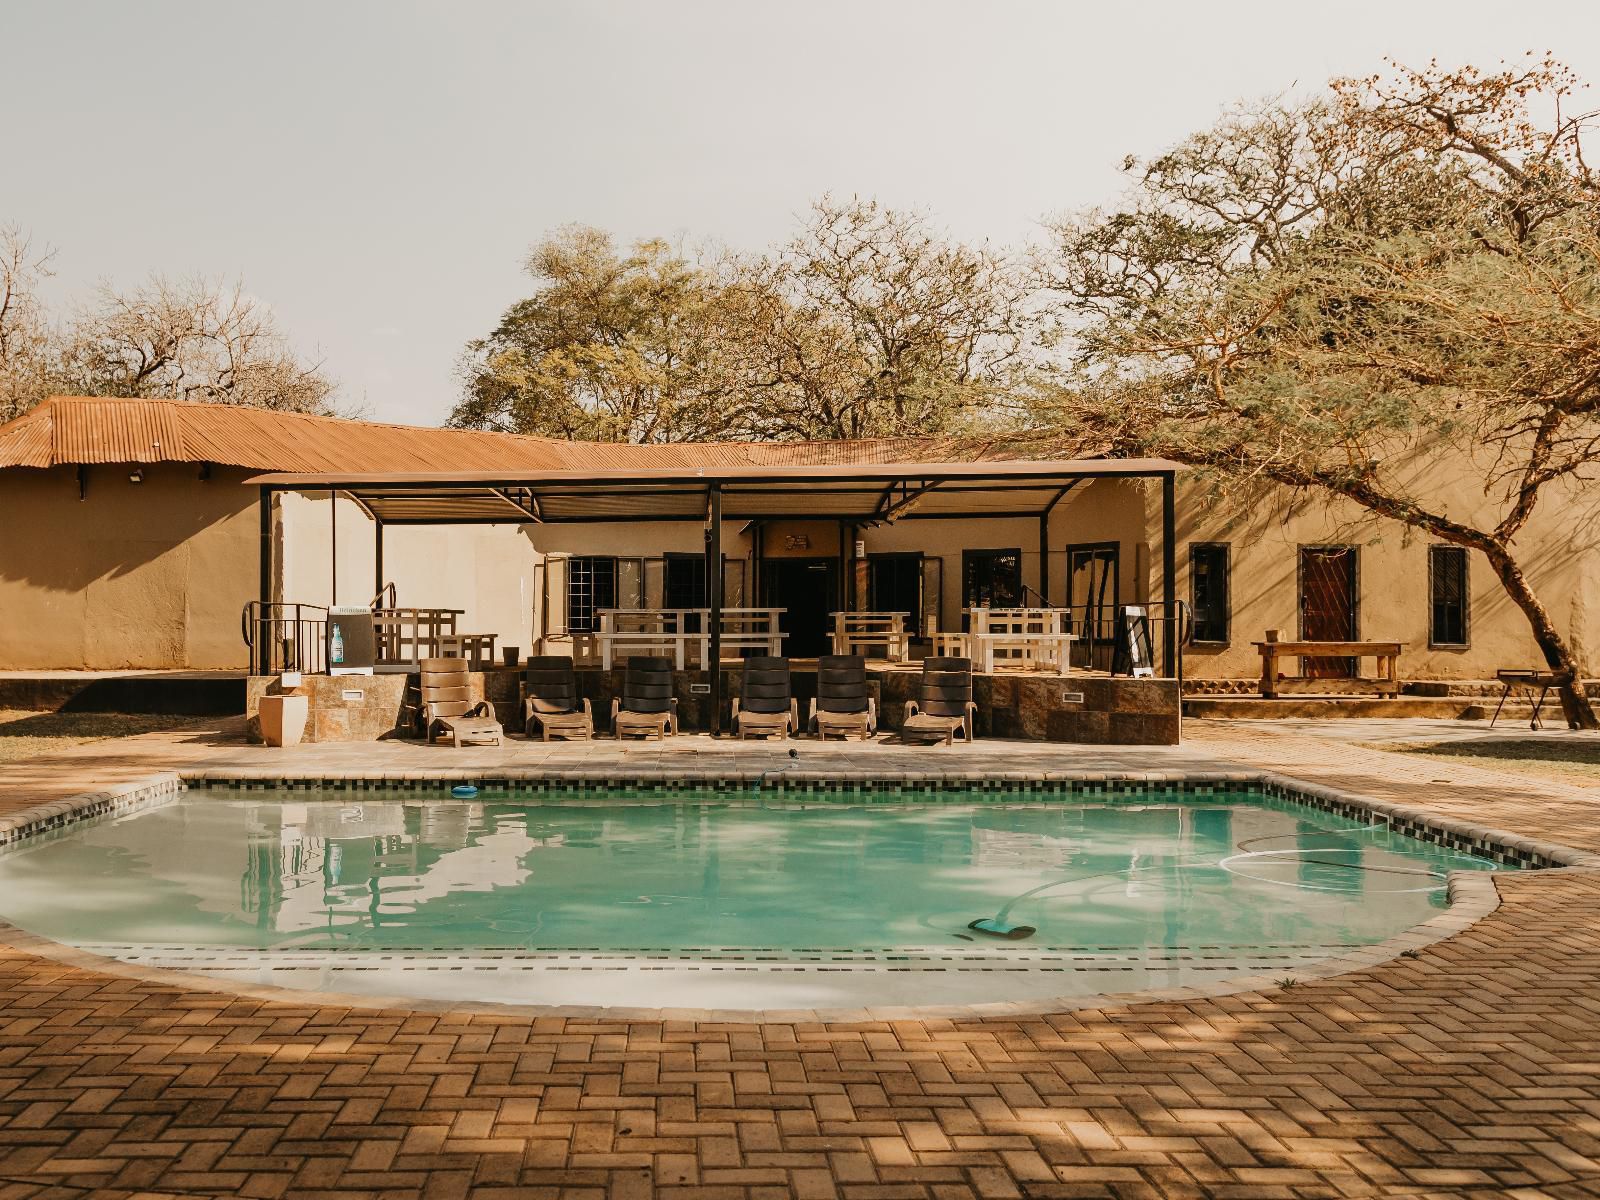 Mabalel Lodge Karino Mpumalanga South Africa Sepia Tones, Swimming Pool